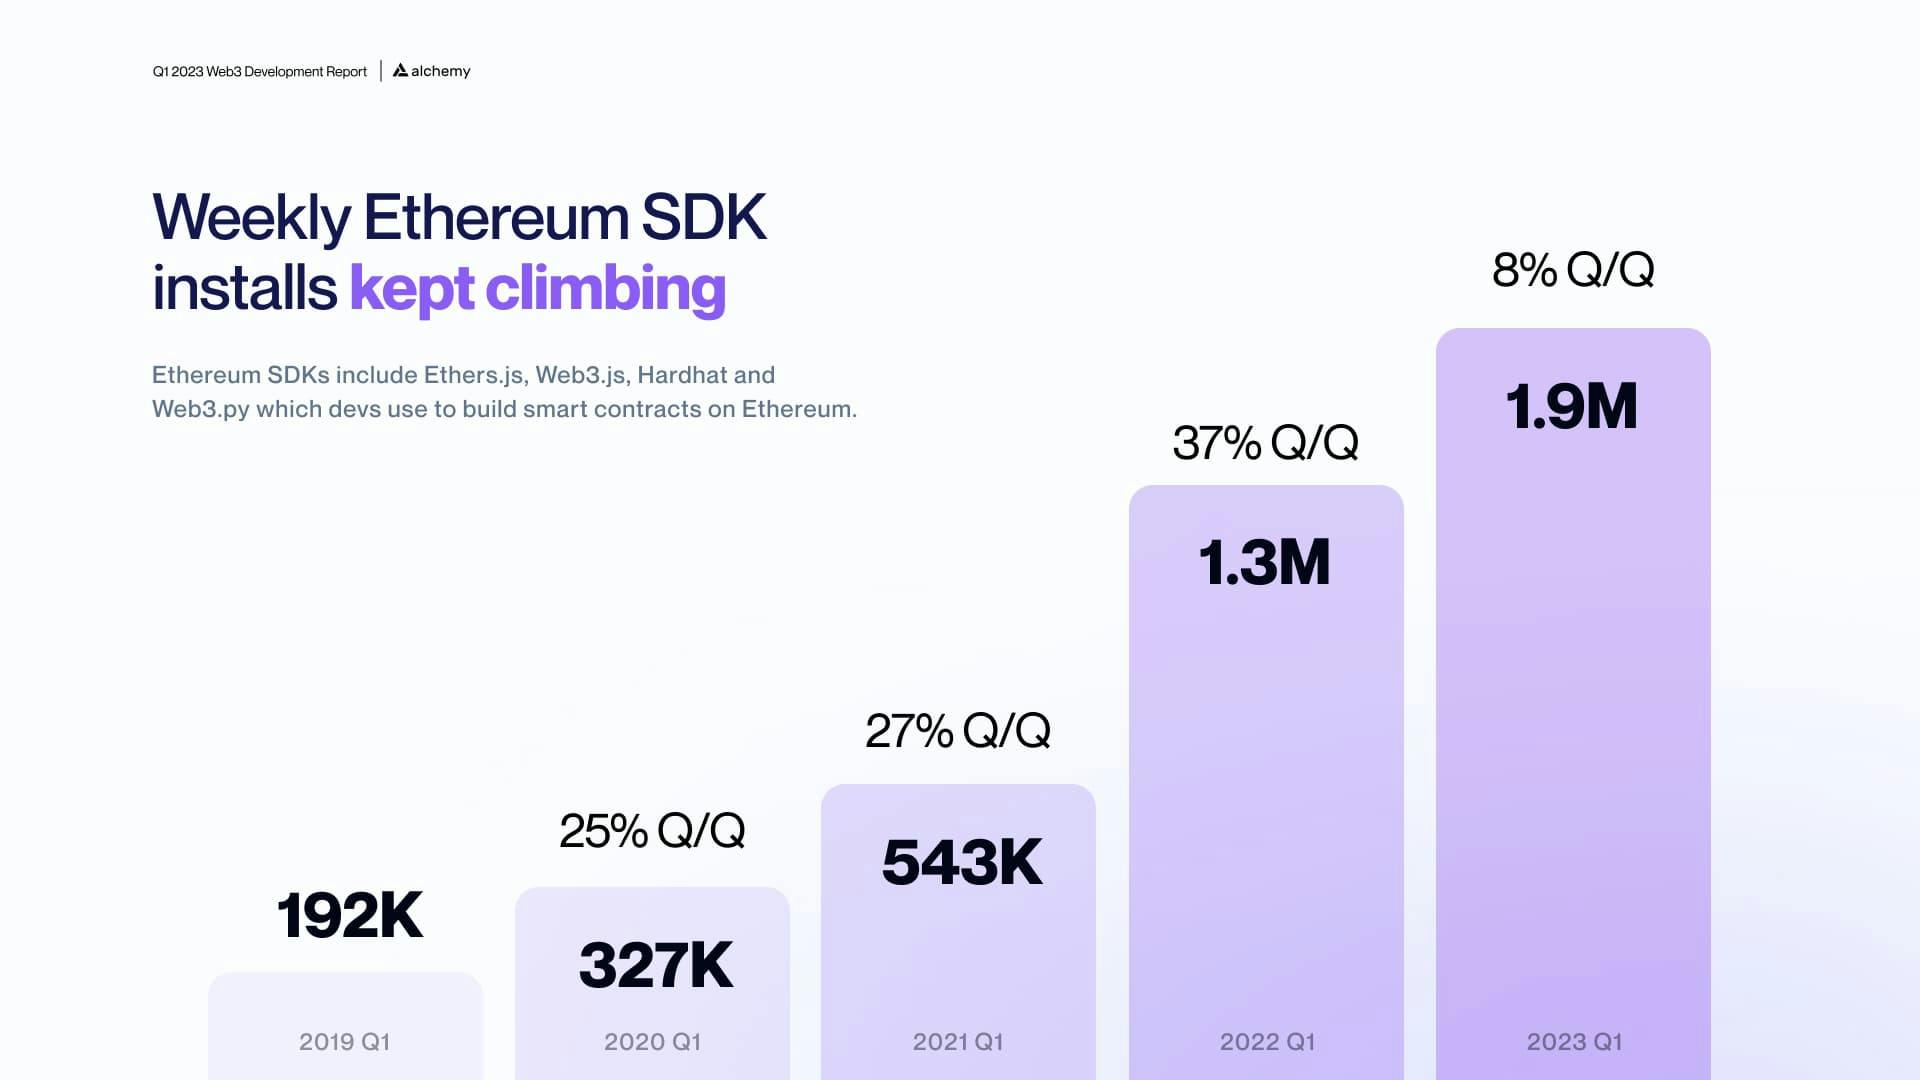 Q1 statistics of weekly Ethereum SDK installs between 2023 and 2019